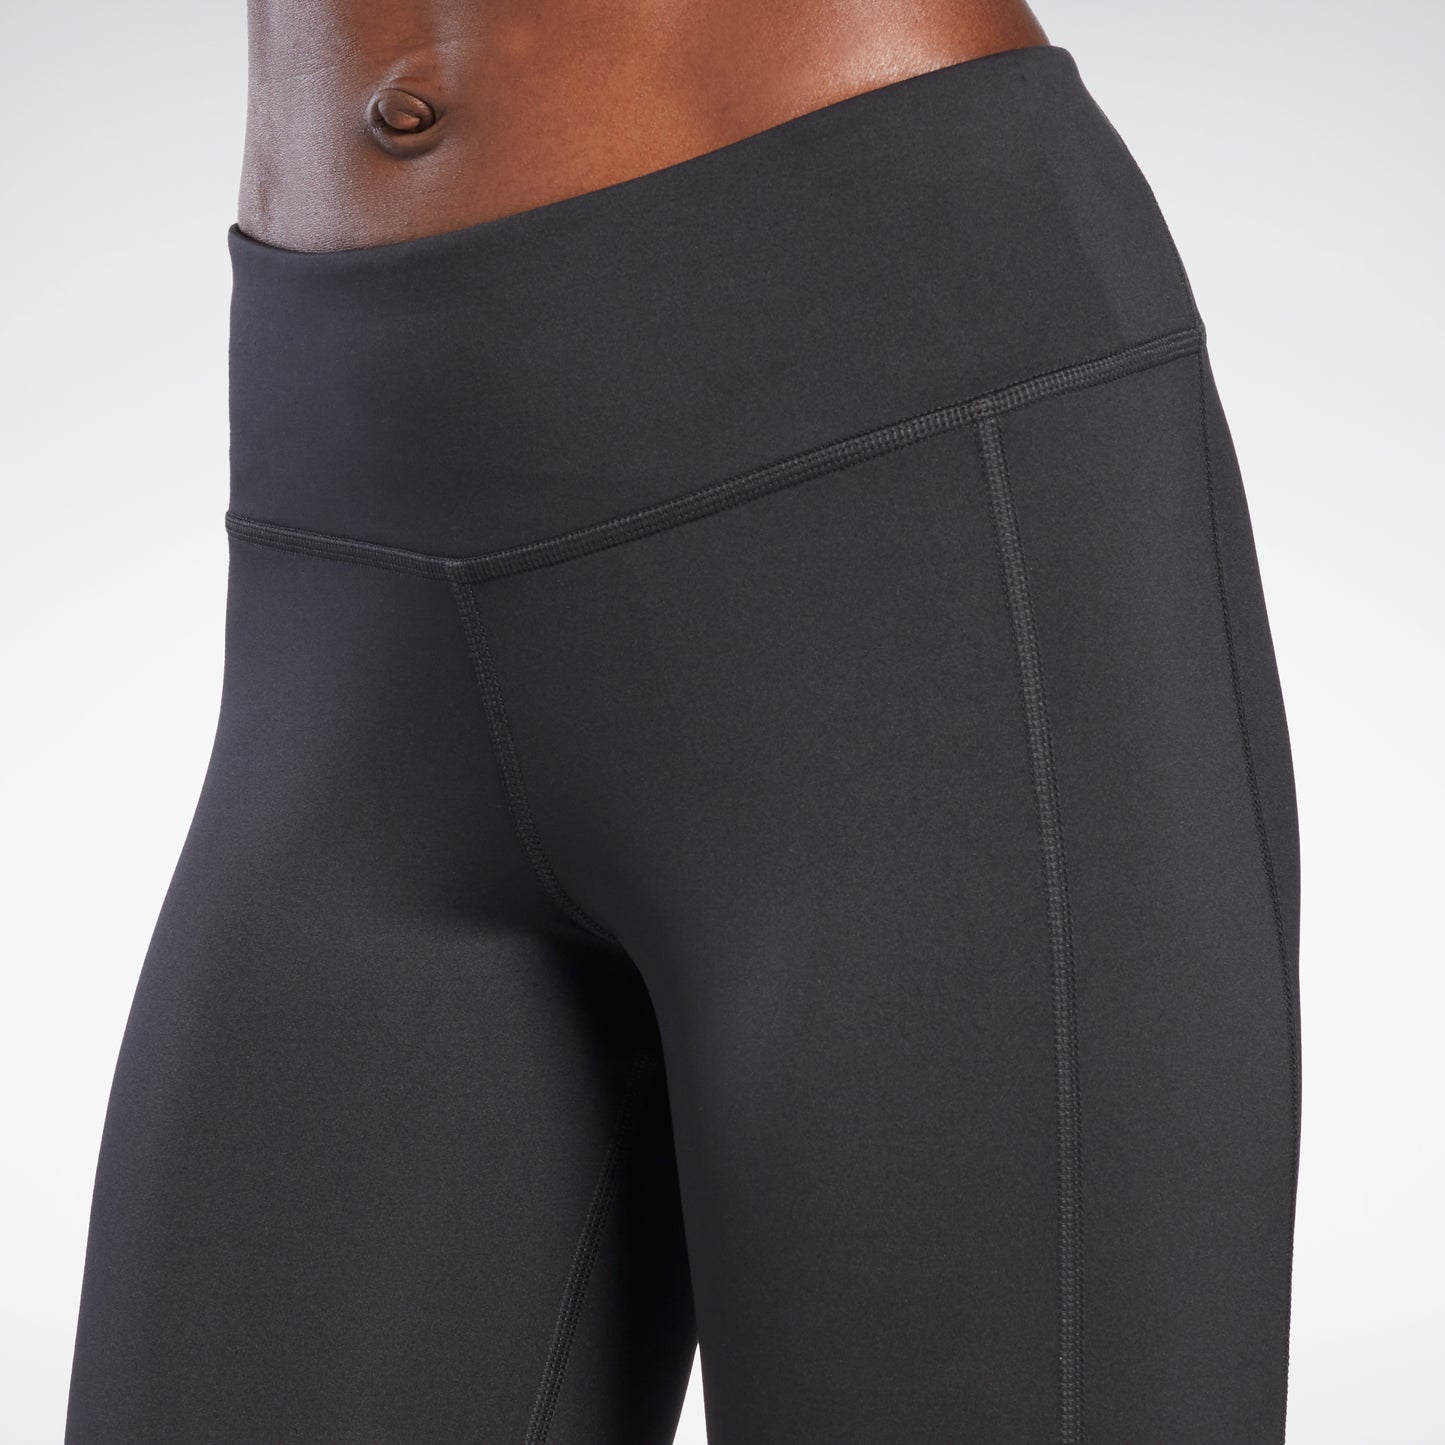  Patchwork Mesh Capri Leggings Leggings Sports Fitness Women  Pants Yoga Pants Mesh Side Yoga Pants Black : Clothing, Shoes & Jewelry